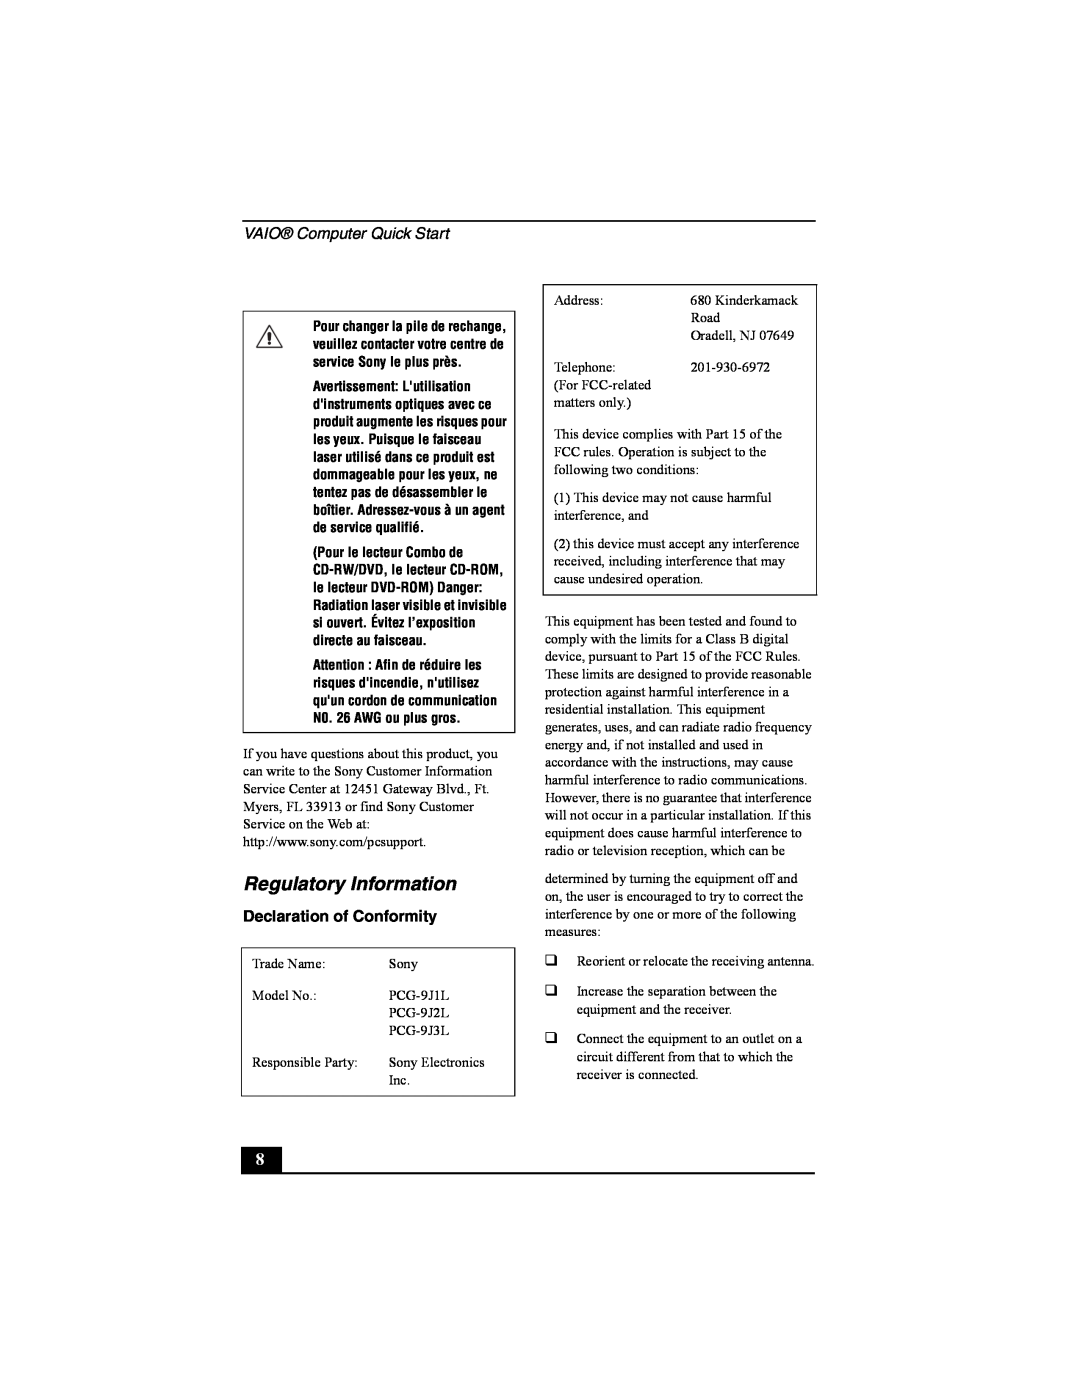 Sony PCG-FRV manual Regulatory Information, VAIO Computer Quick Start, Declaration of Conformity 